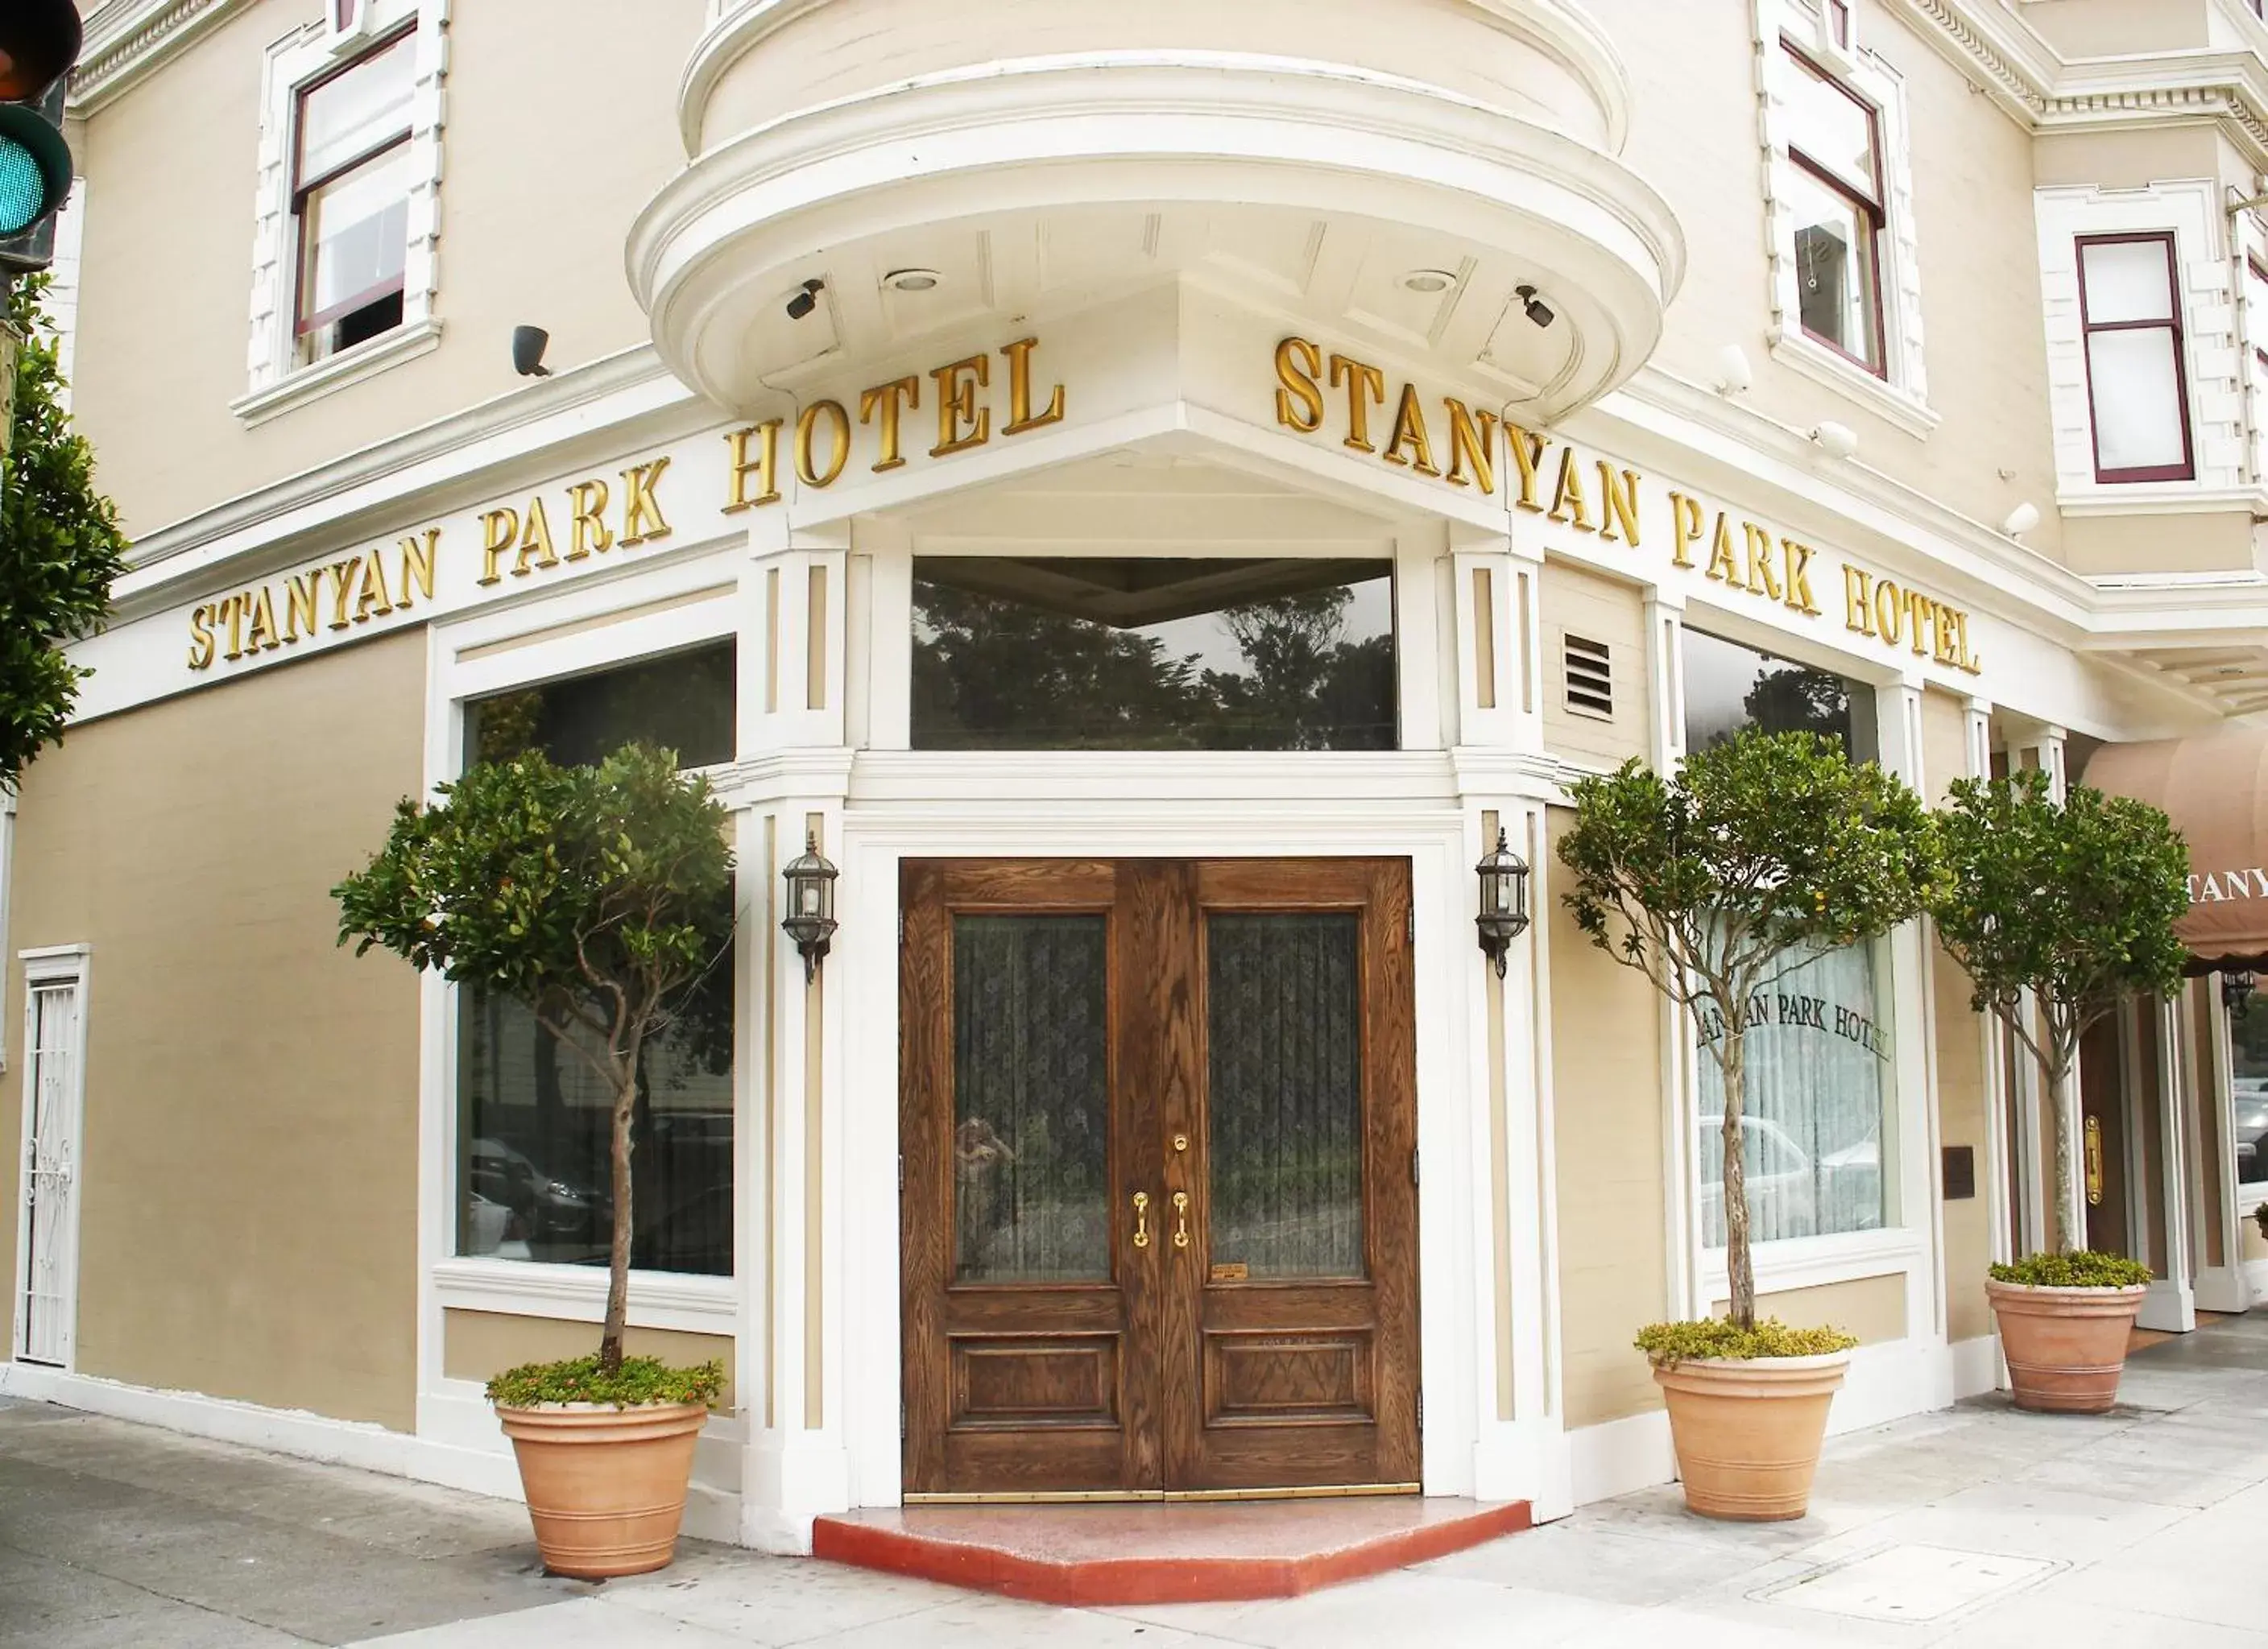 Facade/entrance in Stanyan Park Hotel